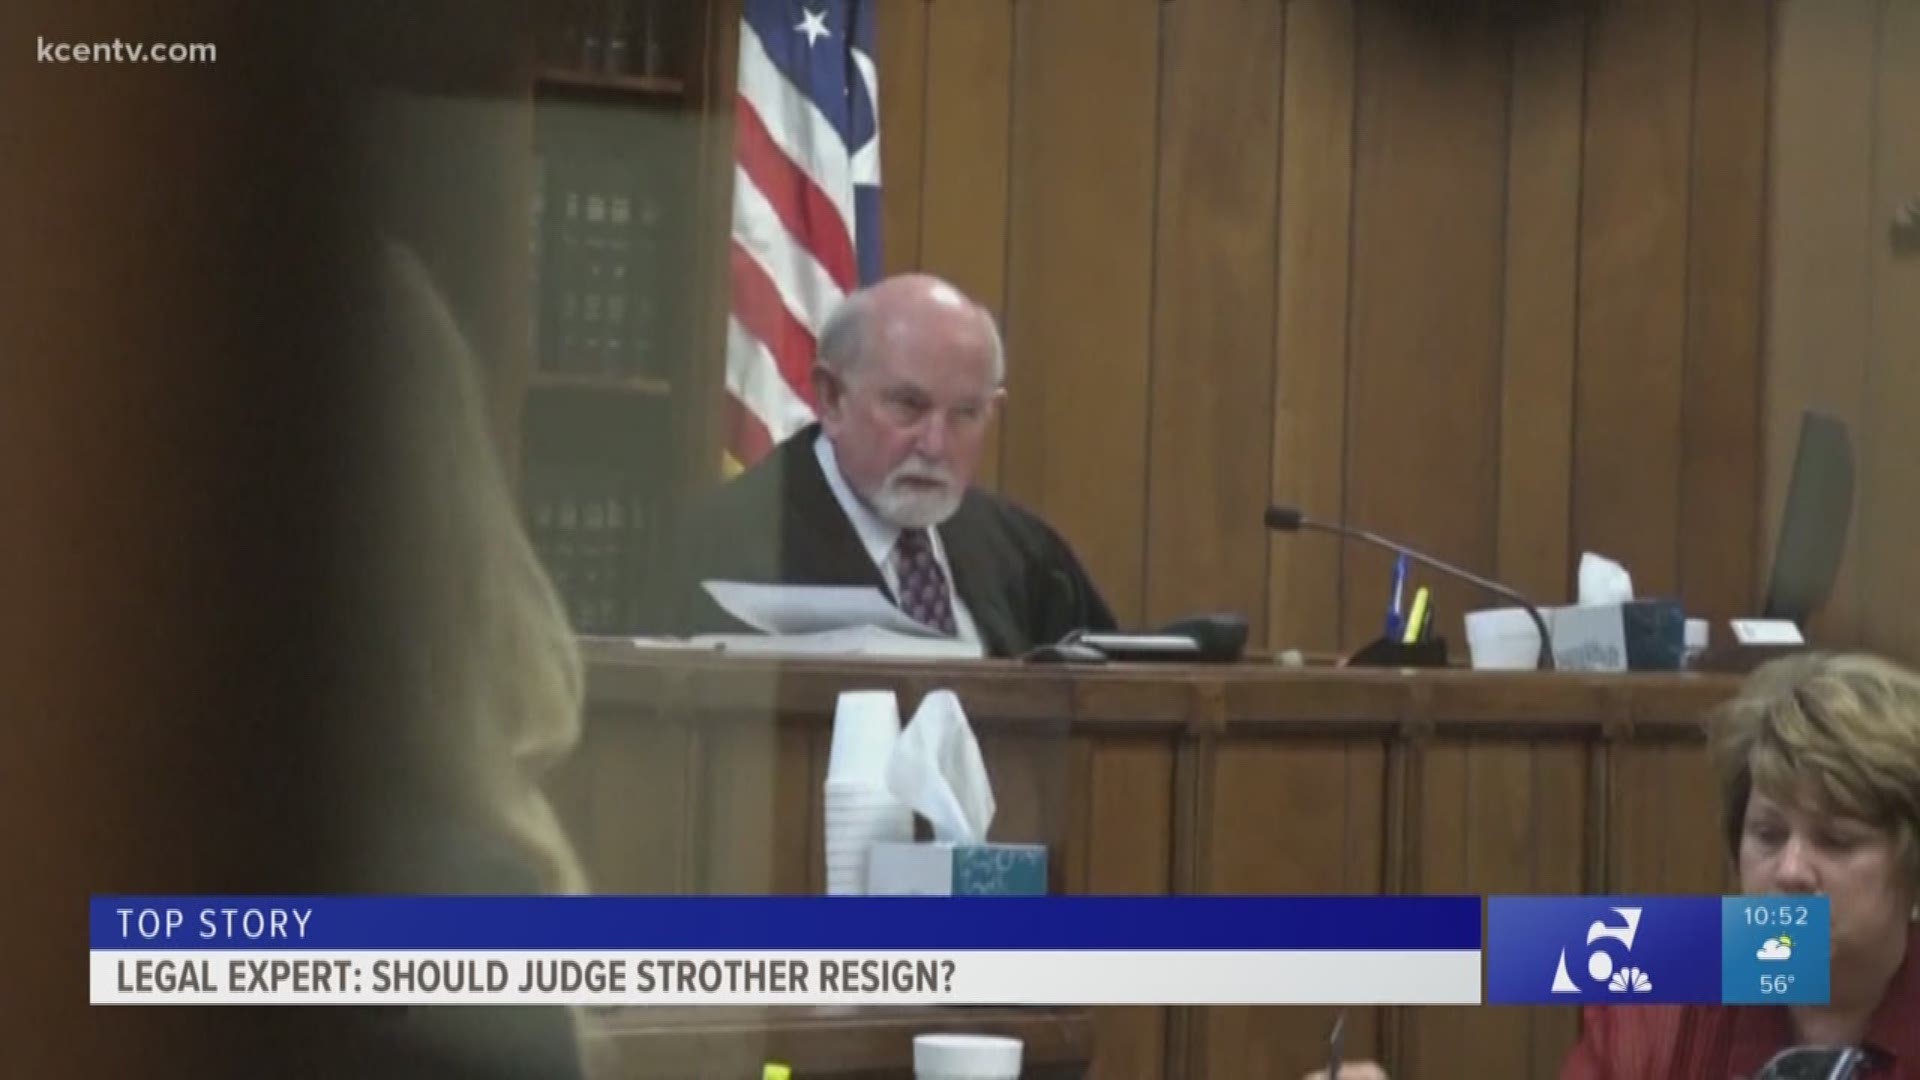 Legal Expert: Should Judge Resign?